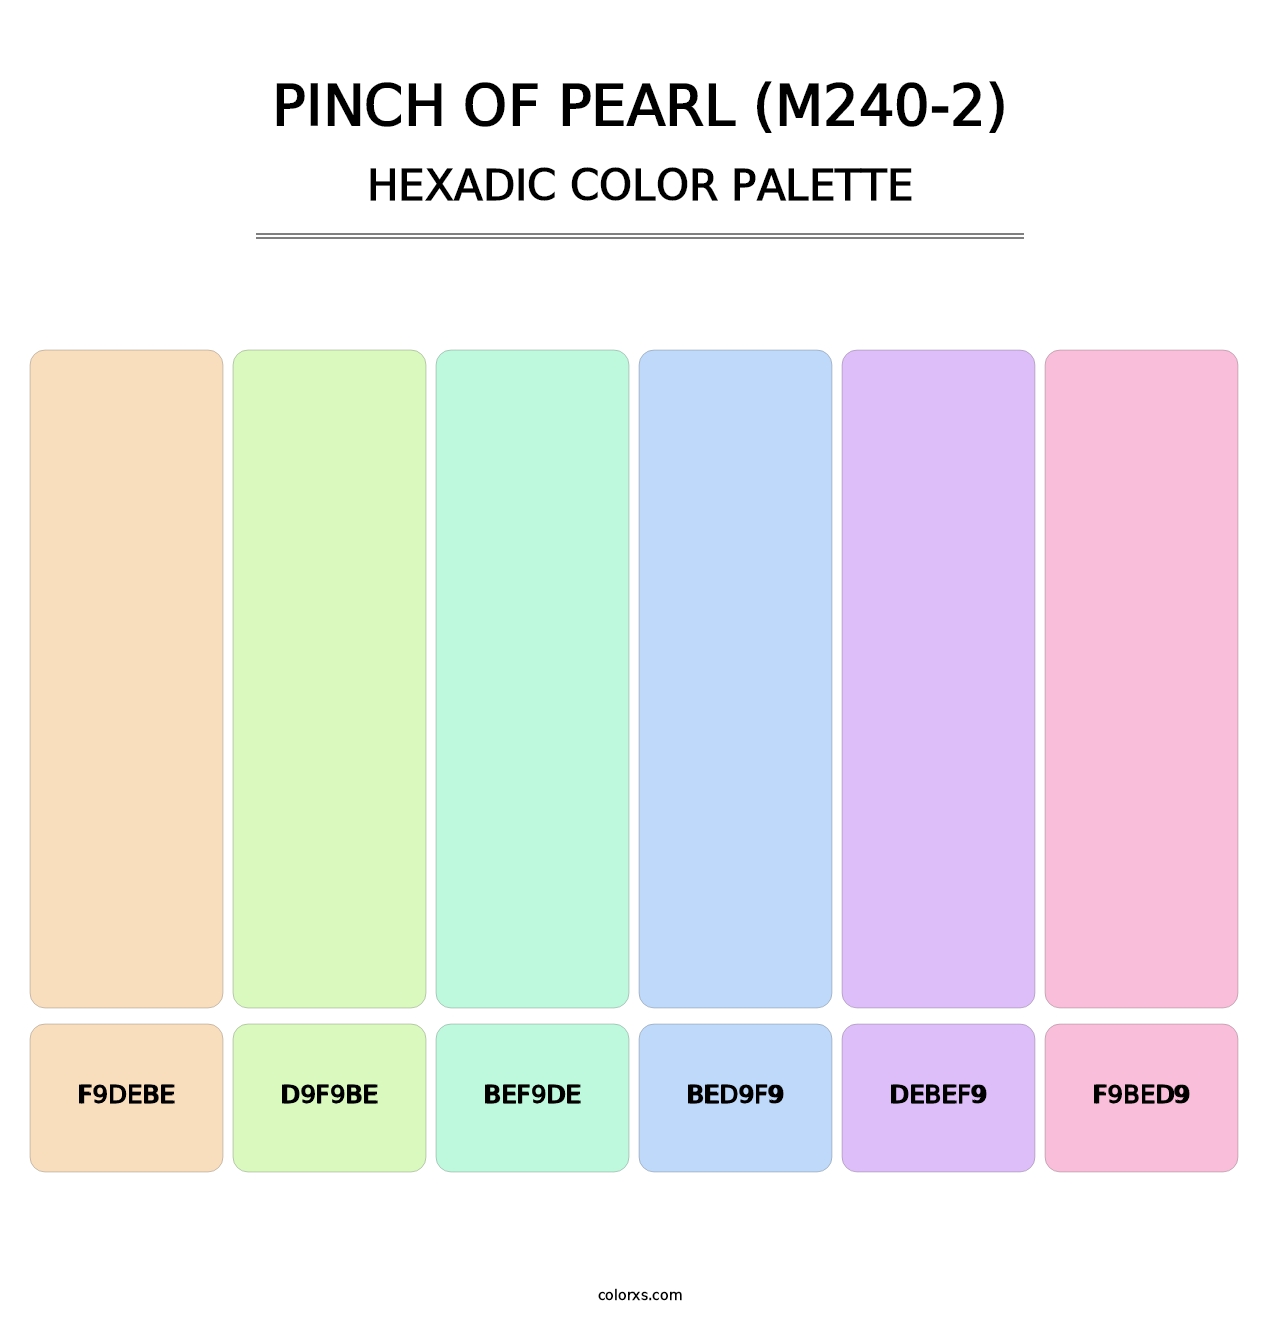 Pinch Of Pearl (M240-2) - Hexadic Color Palette